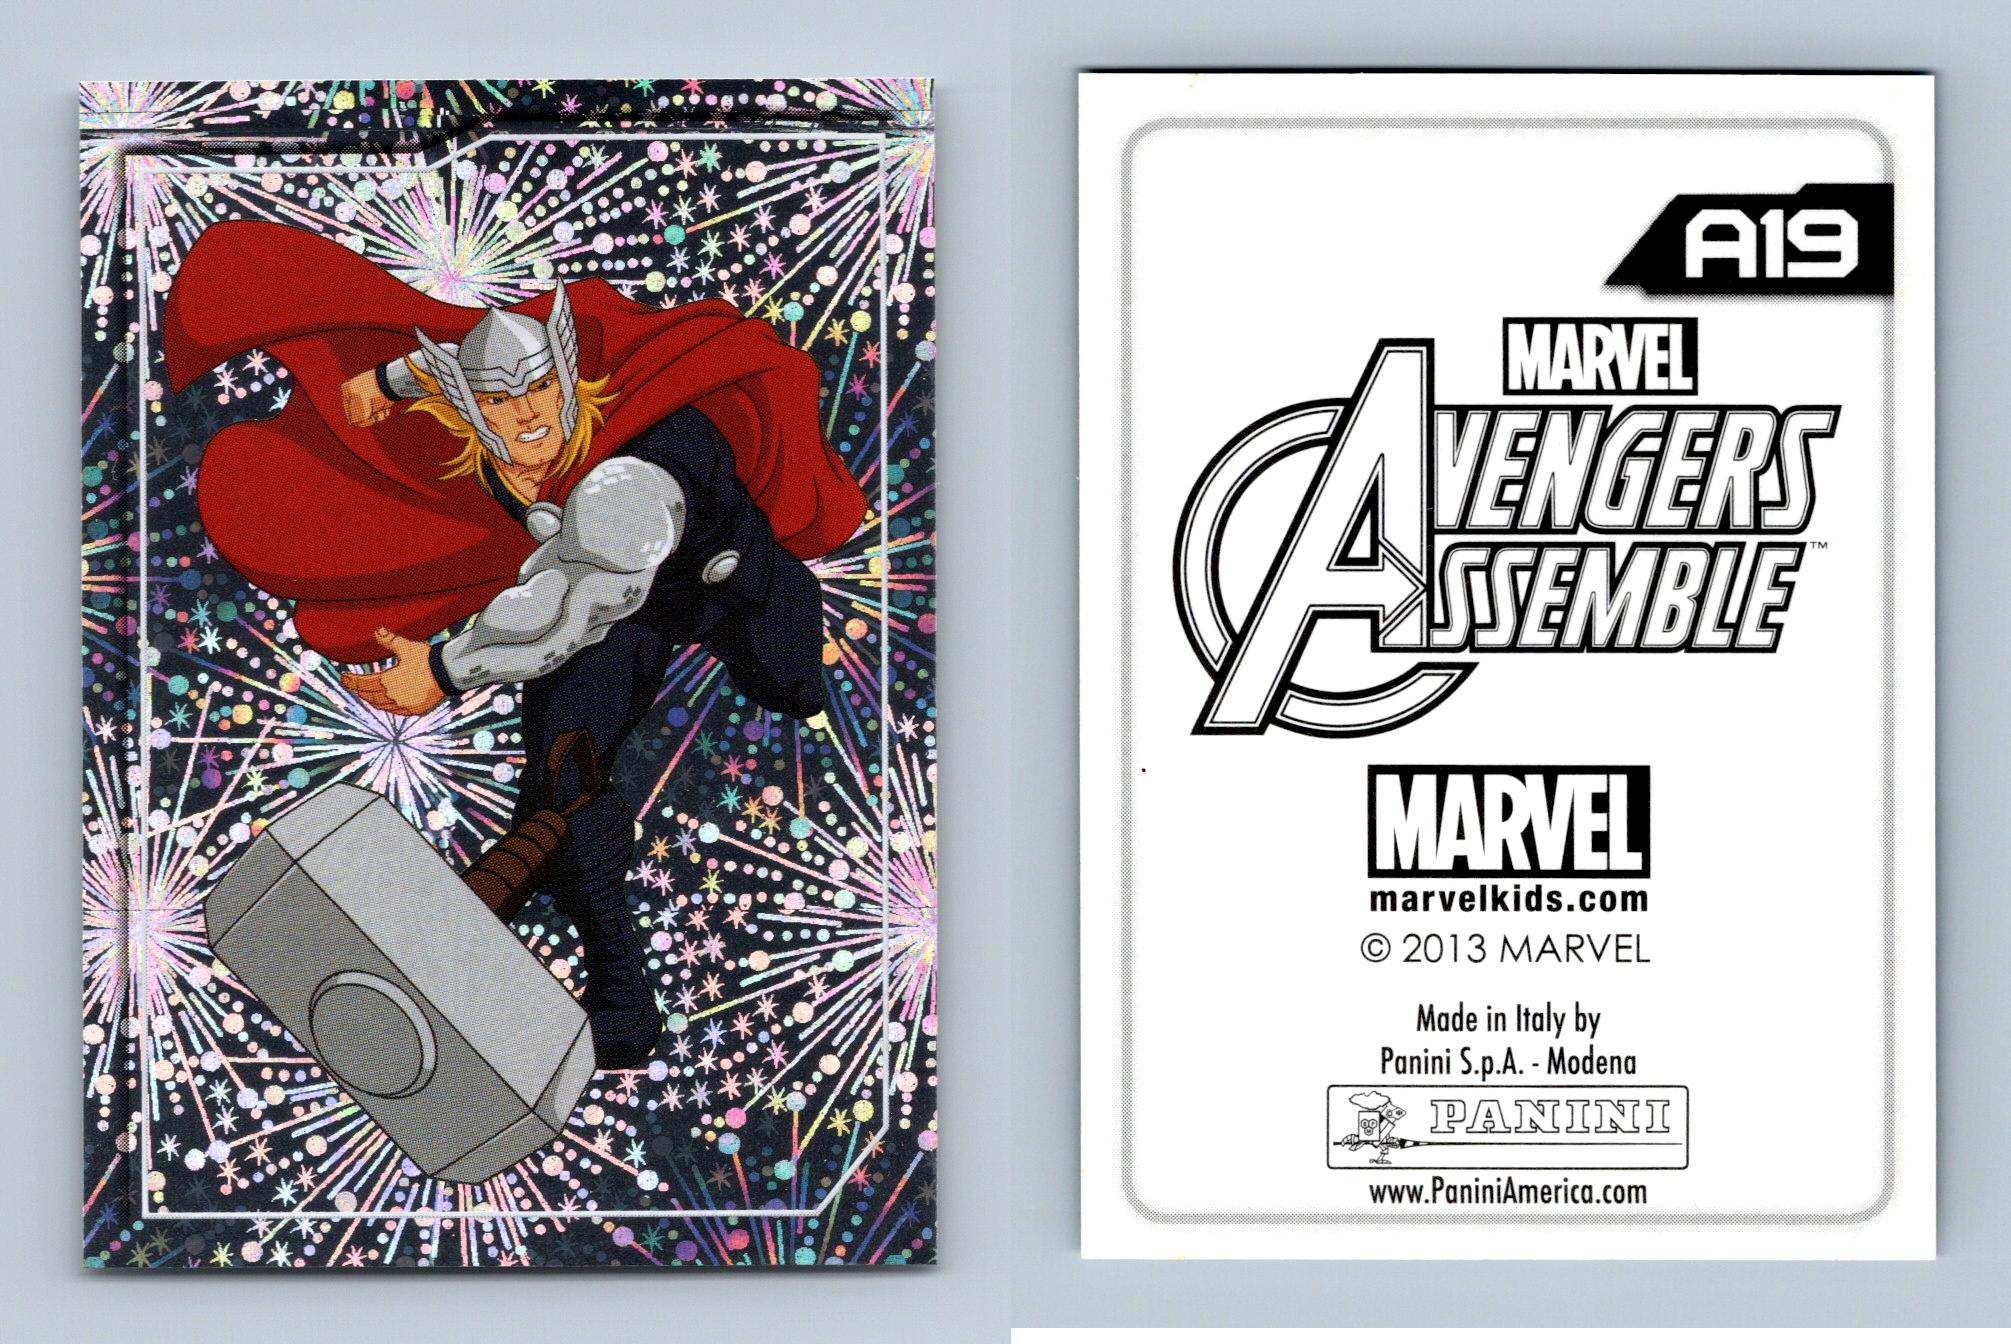 Thor #A19 Marvel Avengers Assemble 2013 Panini Foil Sticker C1777 